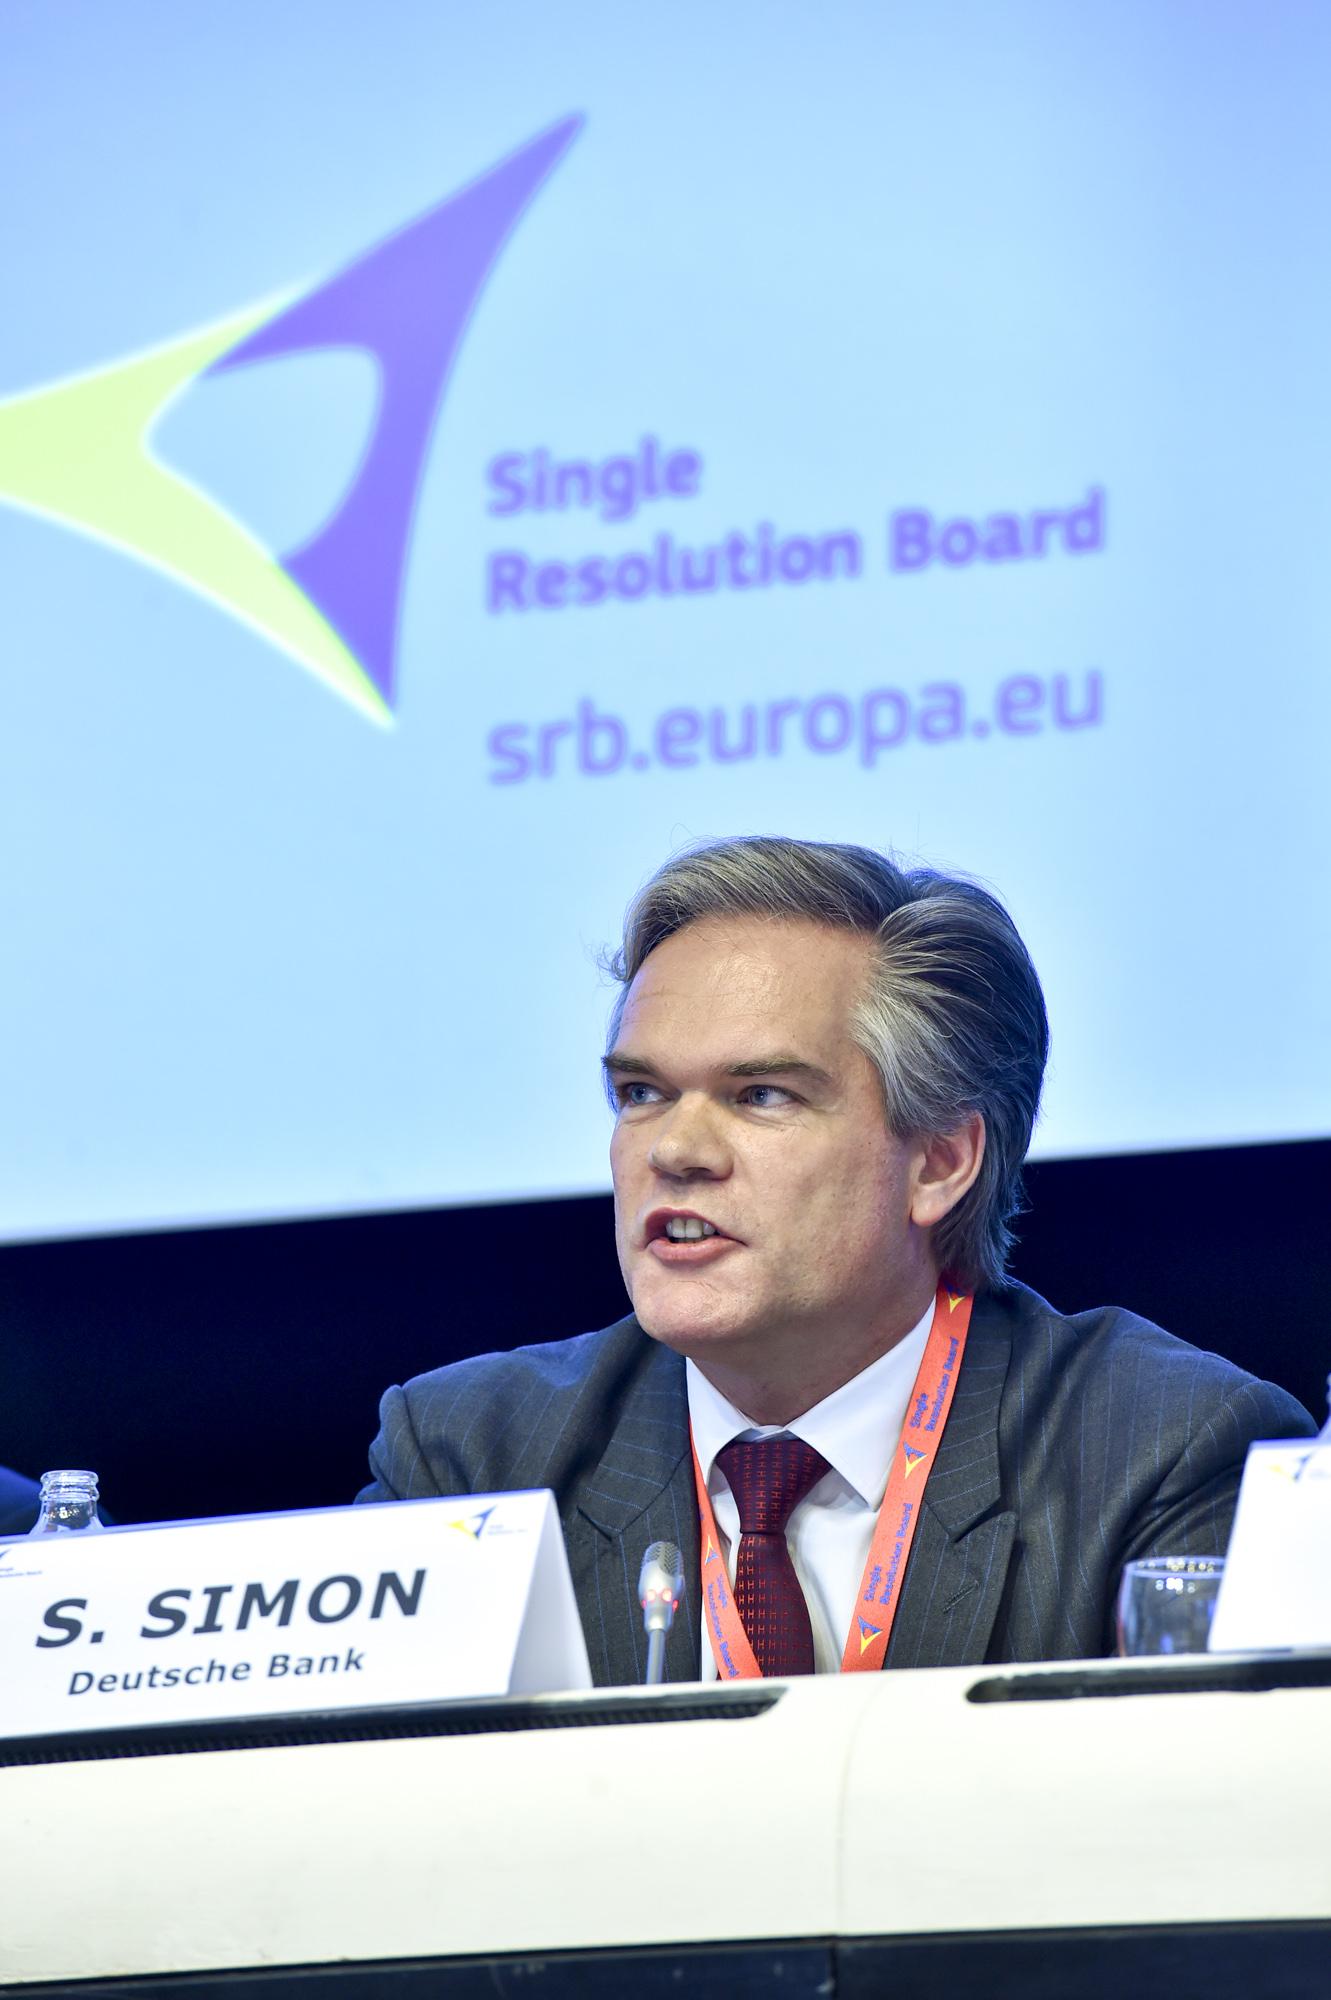 Stefan Simon, Senior Group Director, Deutsche Bank AG